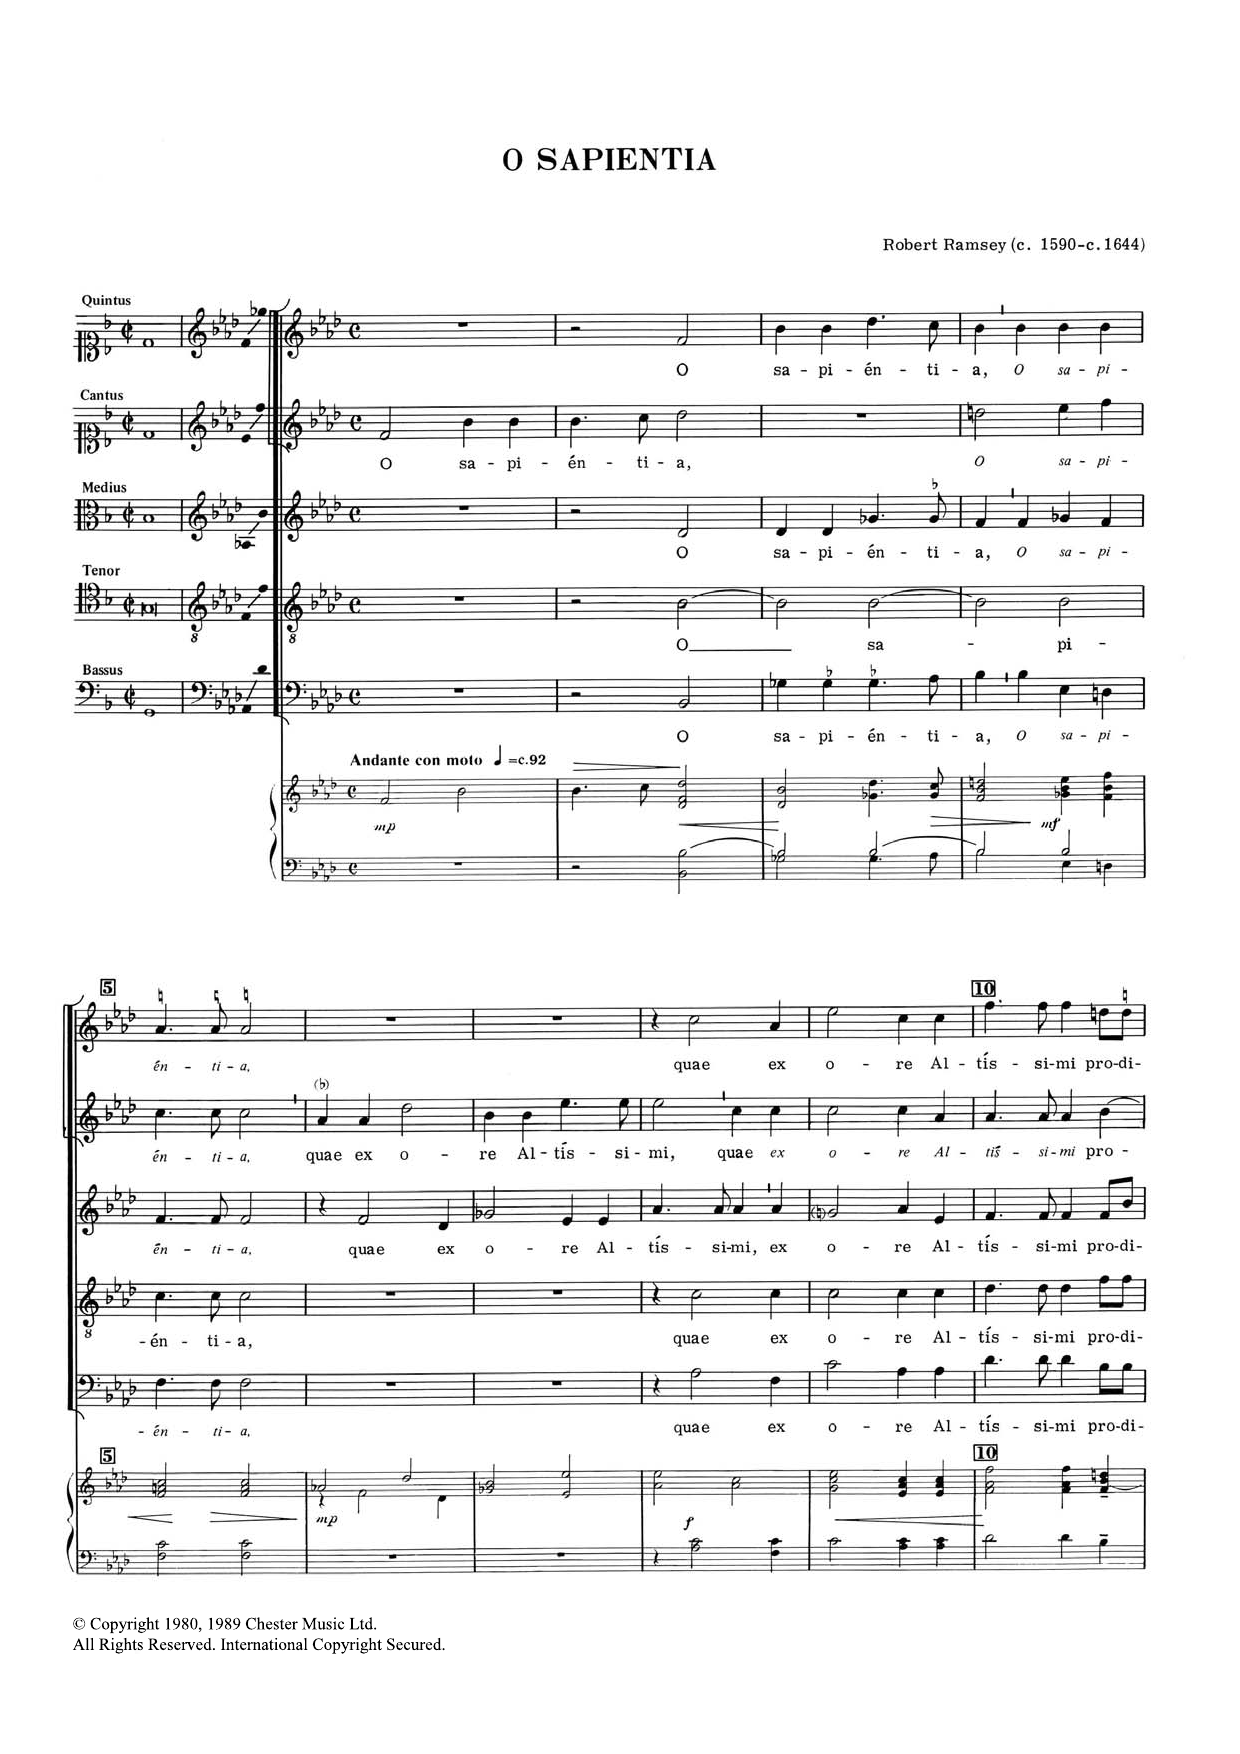 Robert Ramsey O Sapientia sheet music notes and chords arranged for SATB Choir